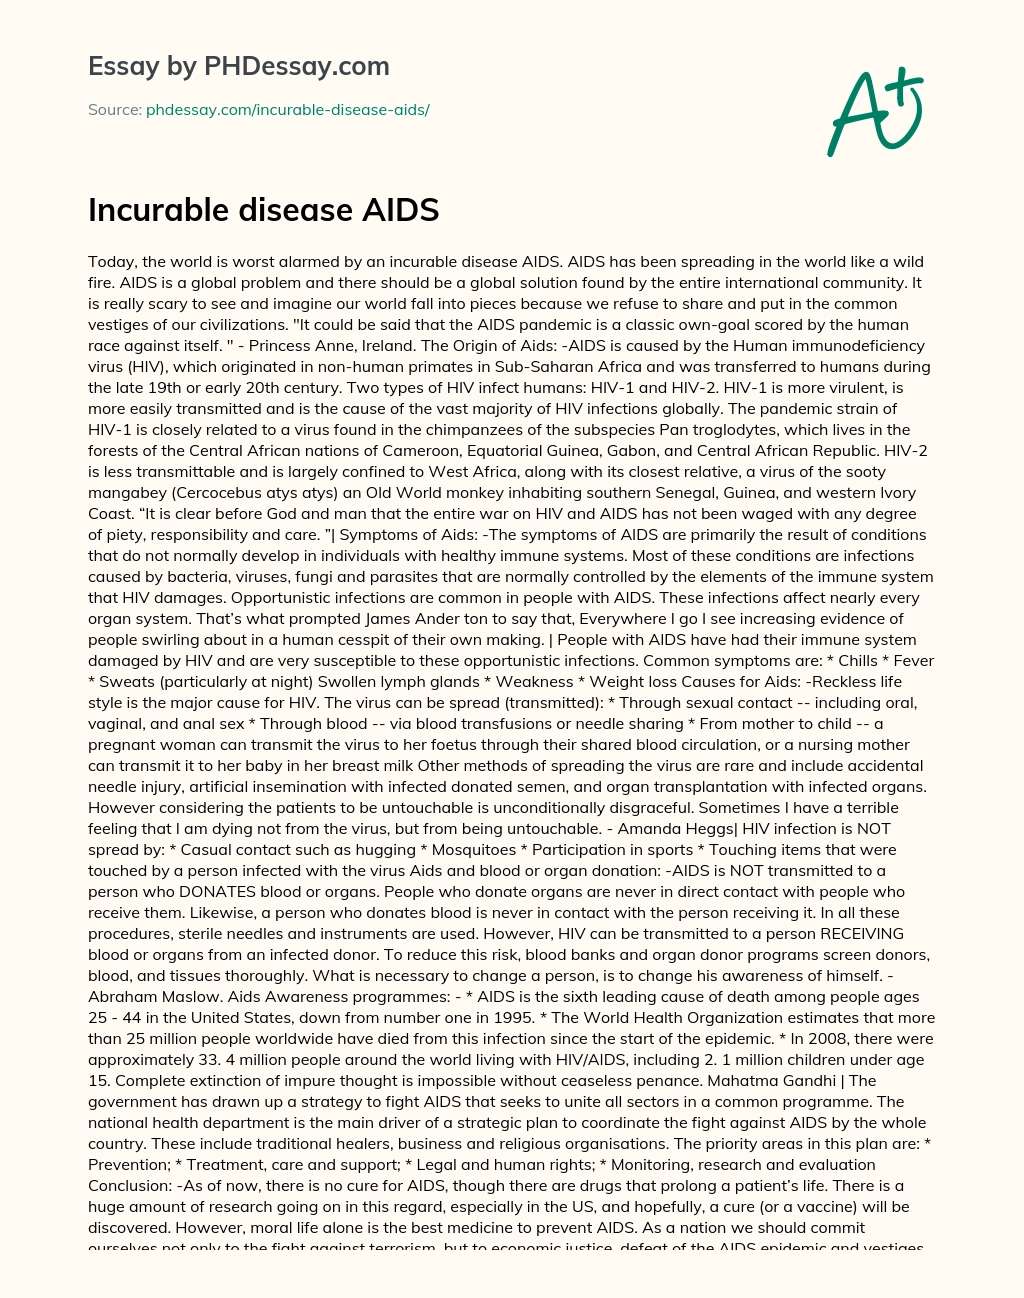 Incurable disease AIDS essay